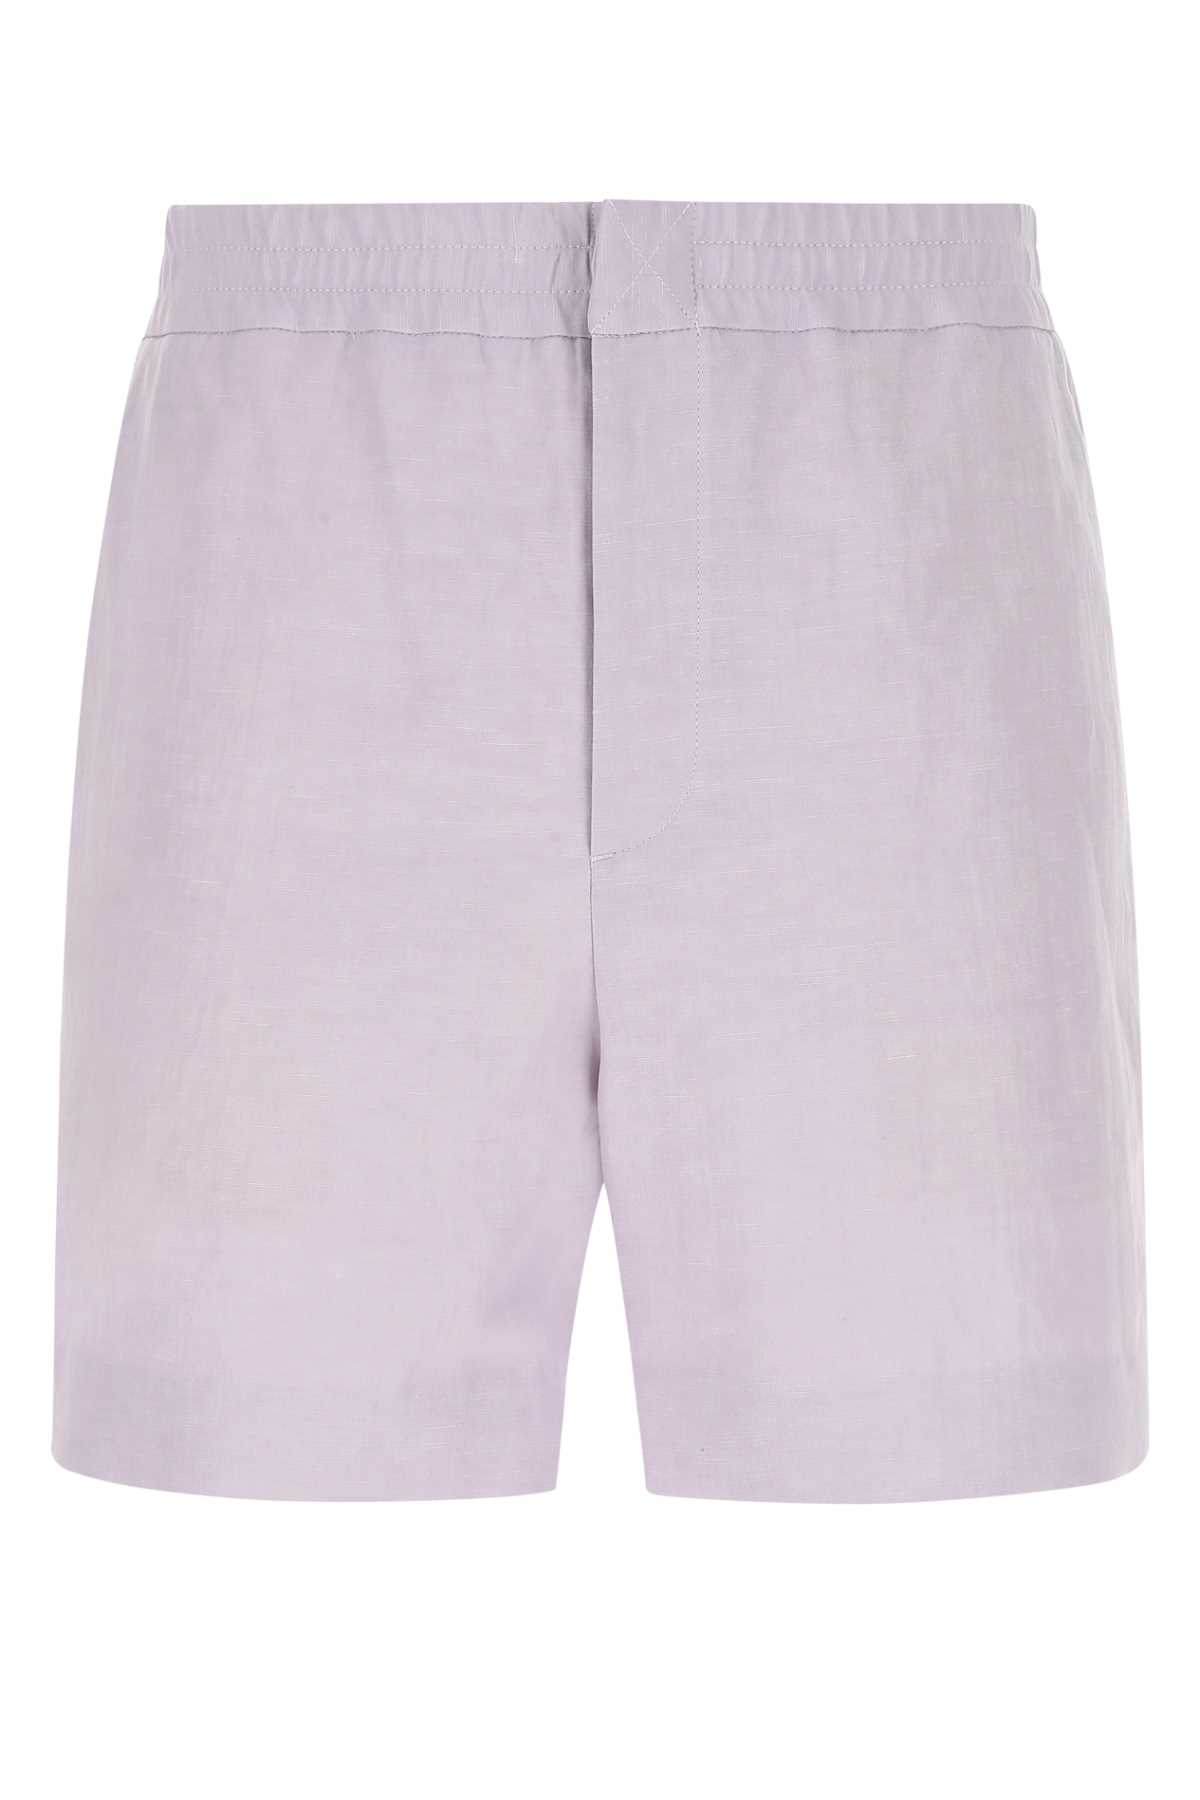 Fendi Lilac Linen Blend Bermuda Shorts